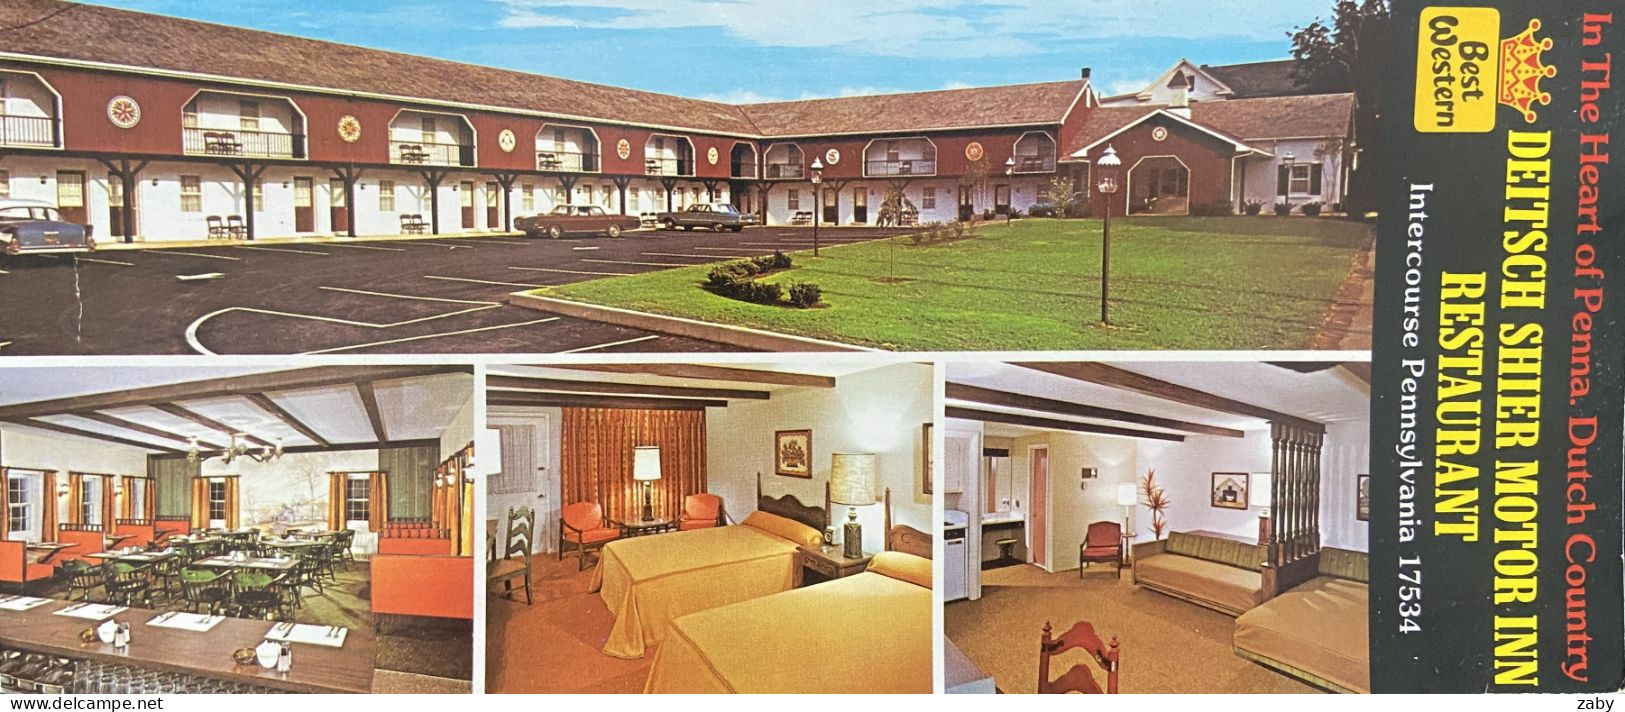 Best Western Deitsch Shier Motor Inn Intercourse Pennsylvania USA - Hotel's & Restaurants